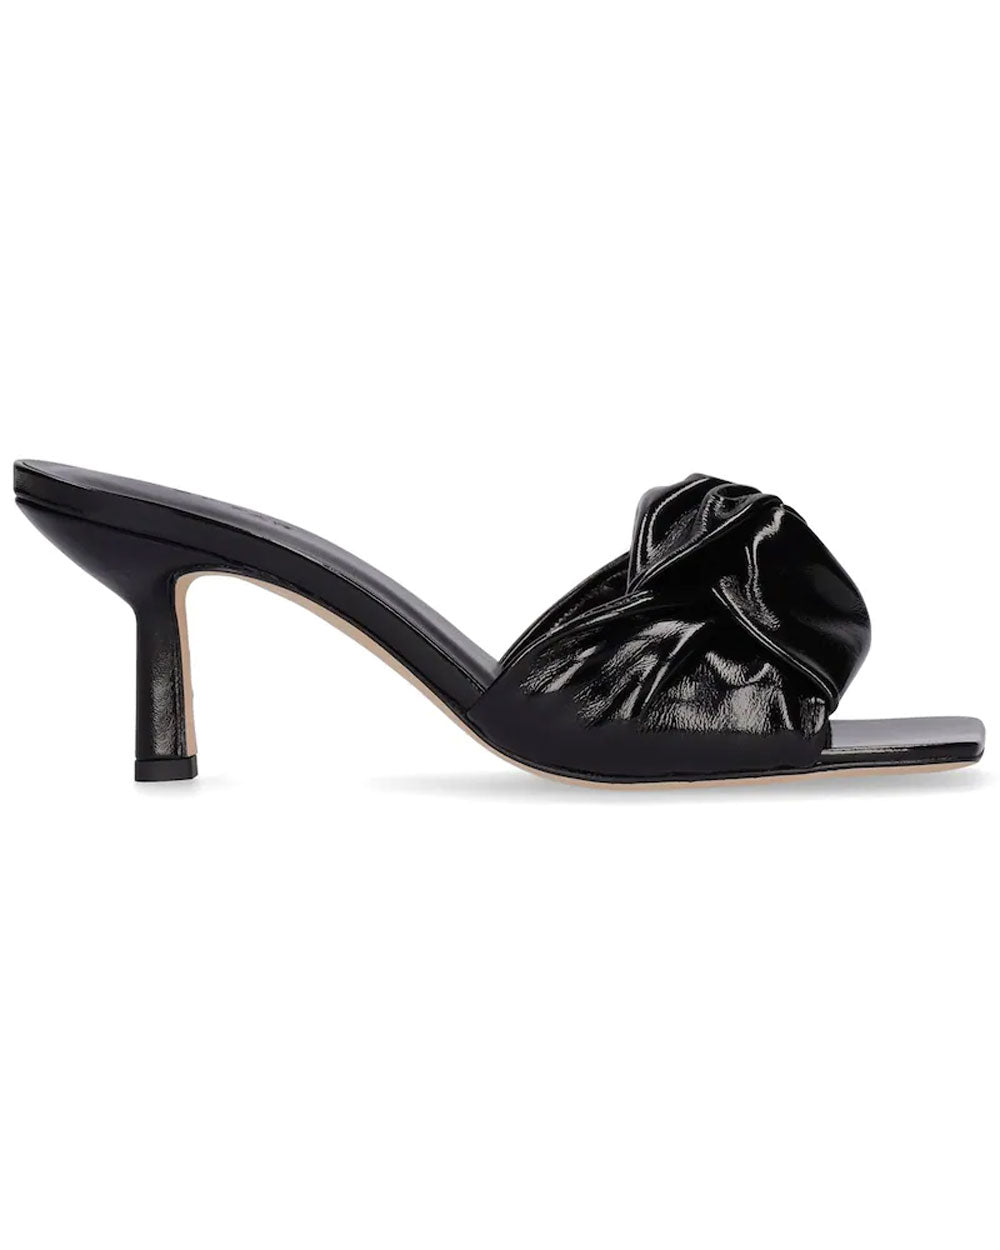 Lana Gloss Leather Mule in Black